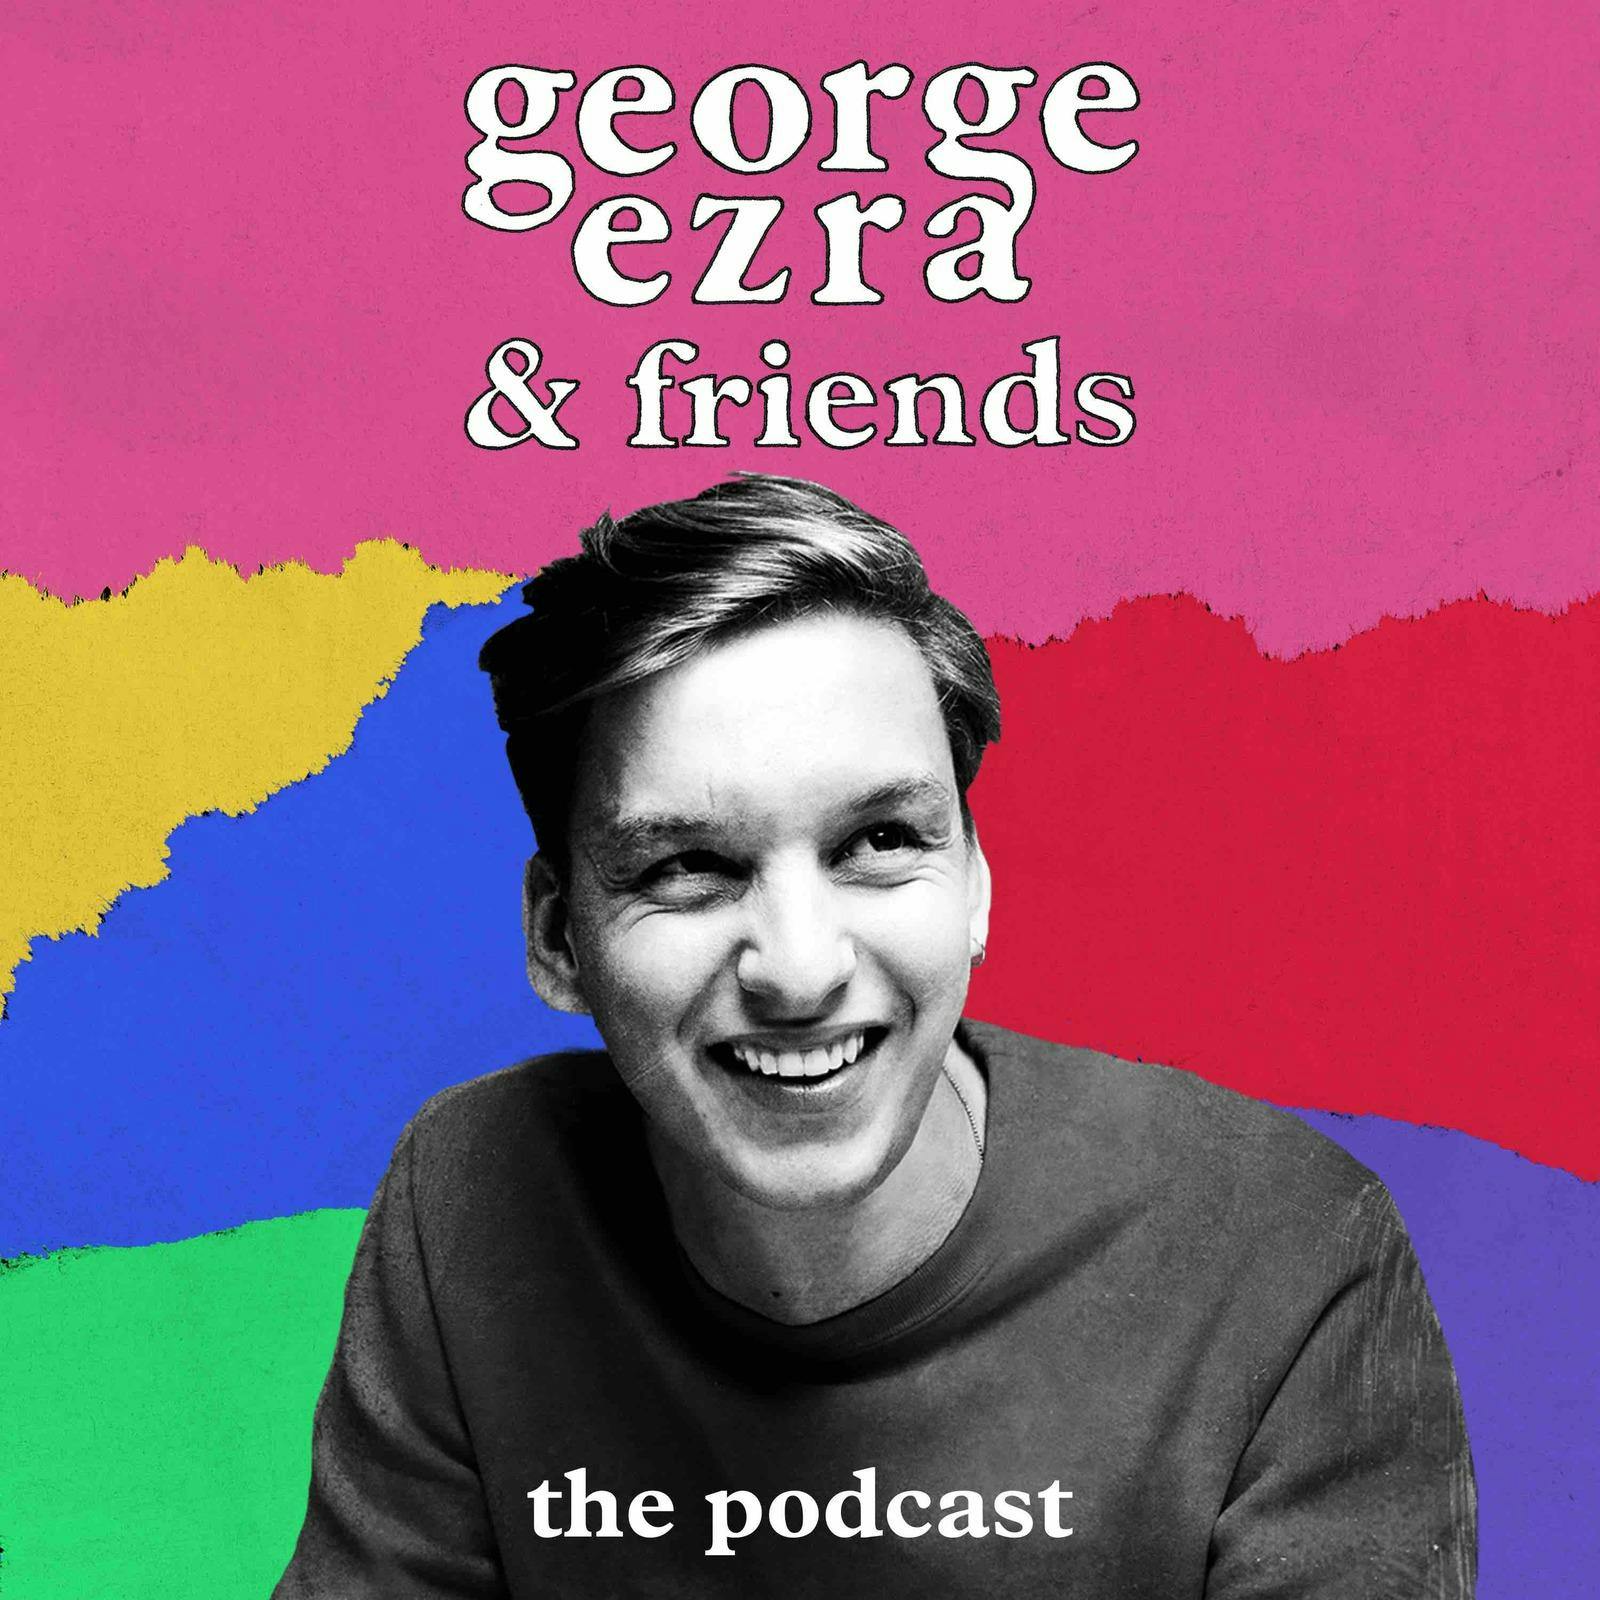 George Ezra & Friends podcast show image